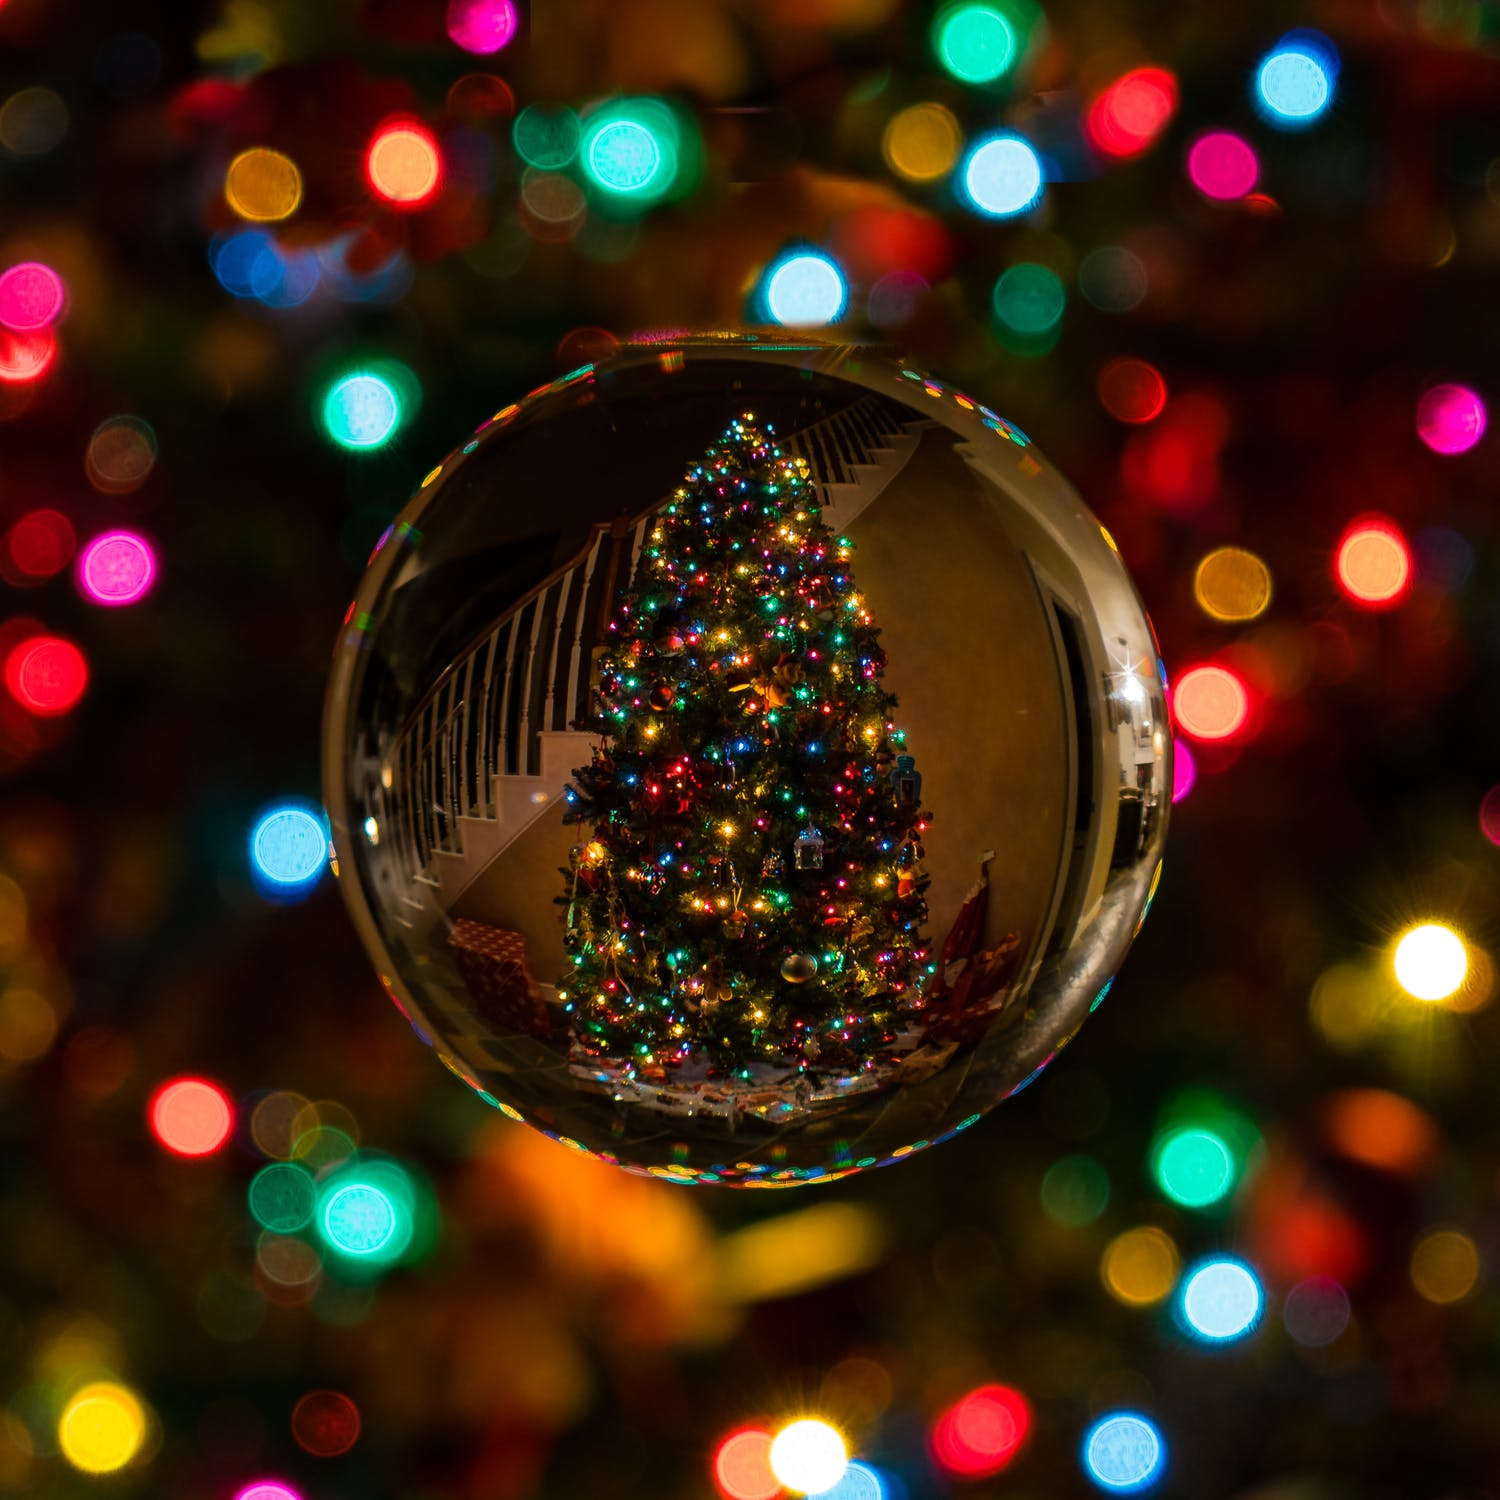 THURSDAY: Naughty Christmas Lights! Correct Predictions PLUS A Christmas Packing Hack